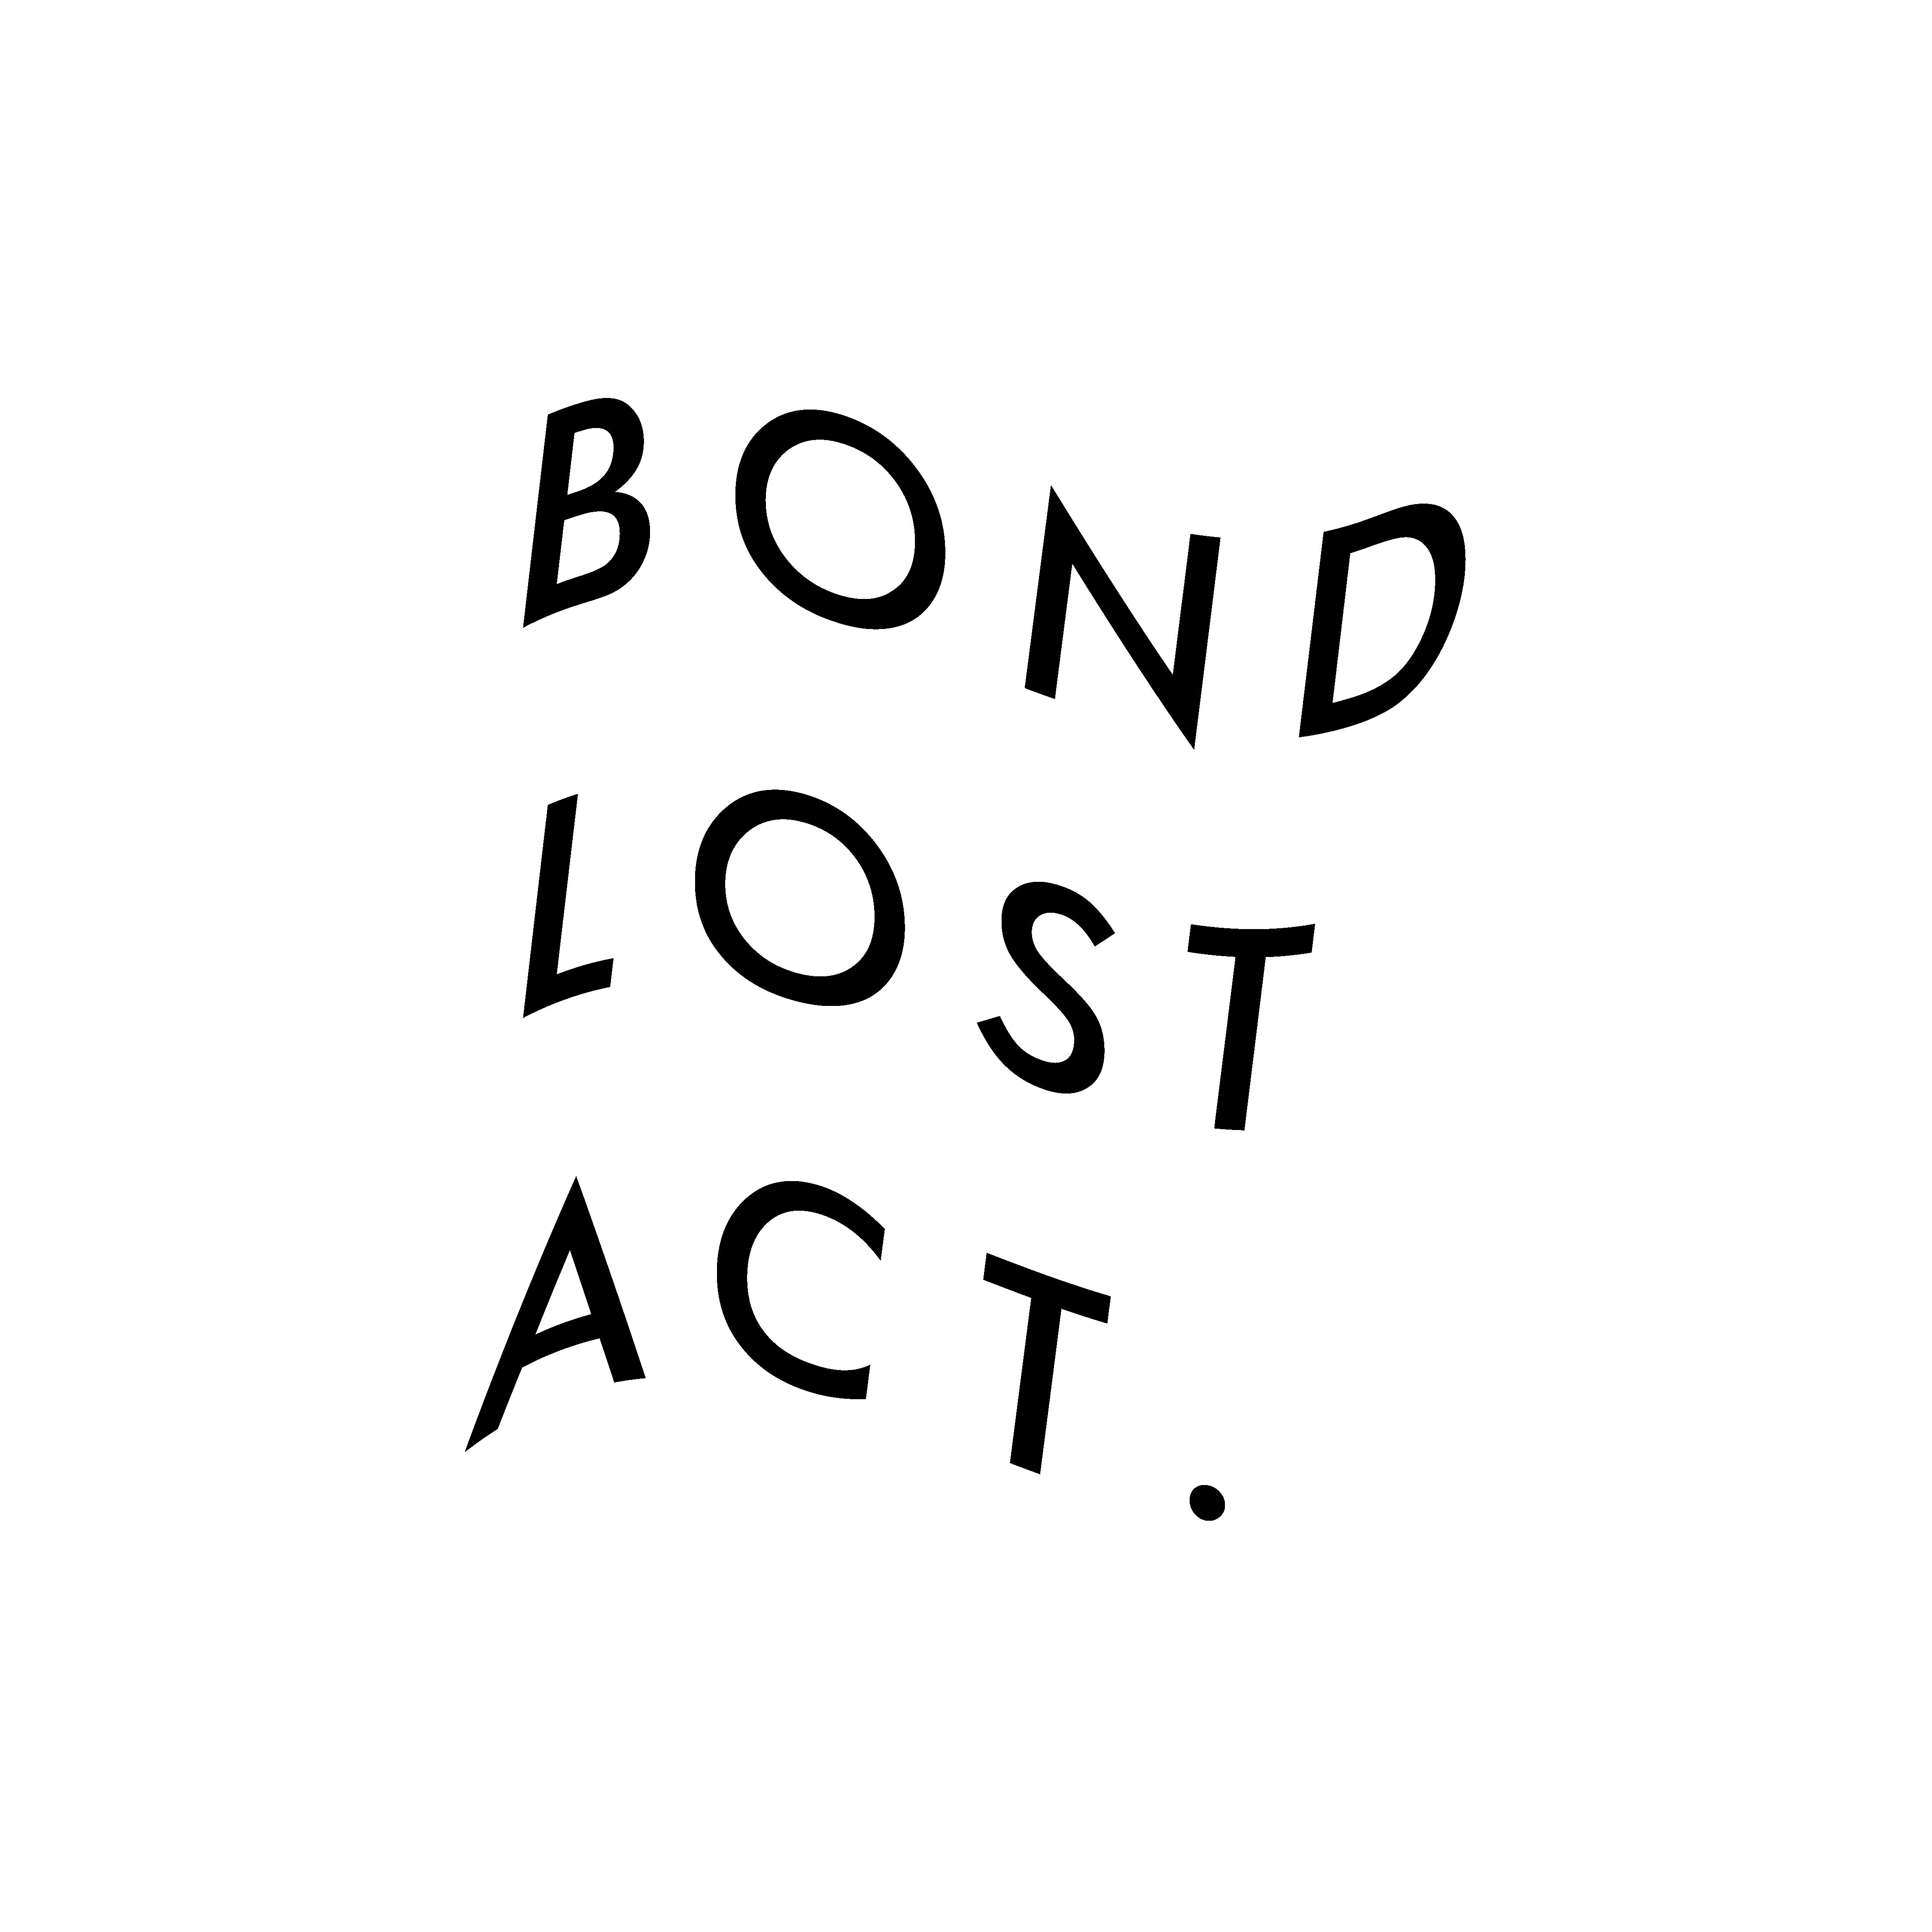 BOND LOST ACT